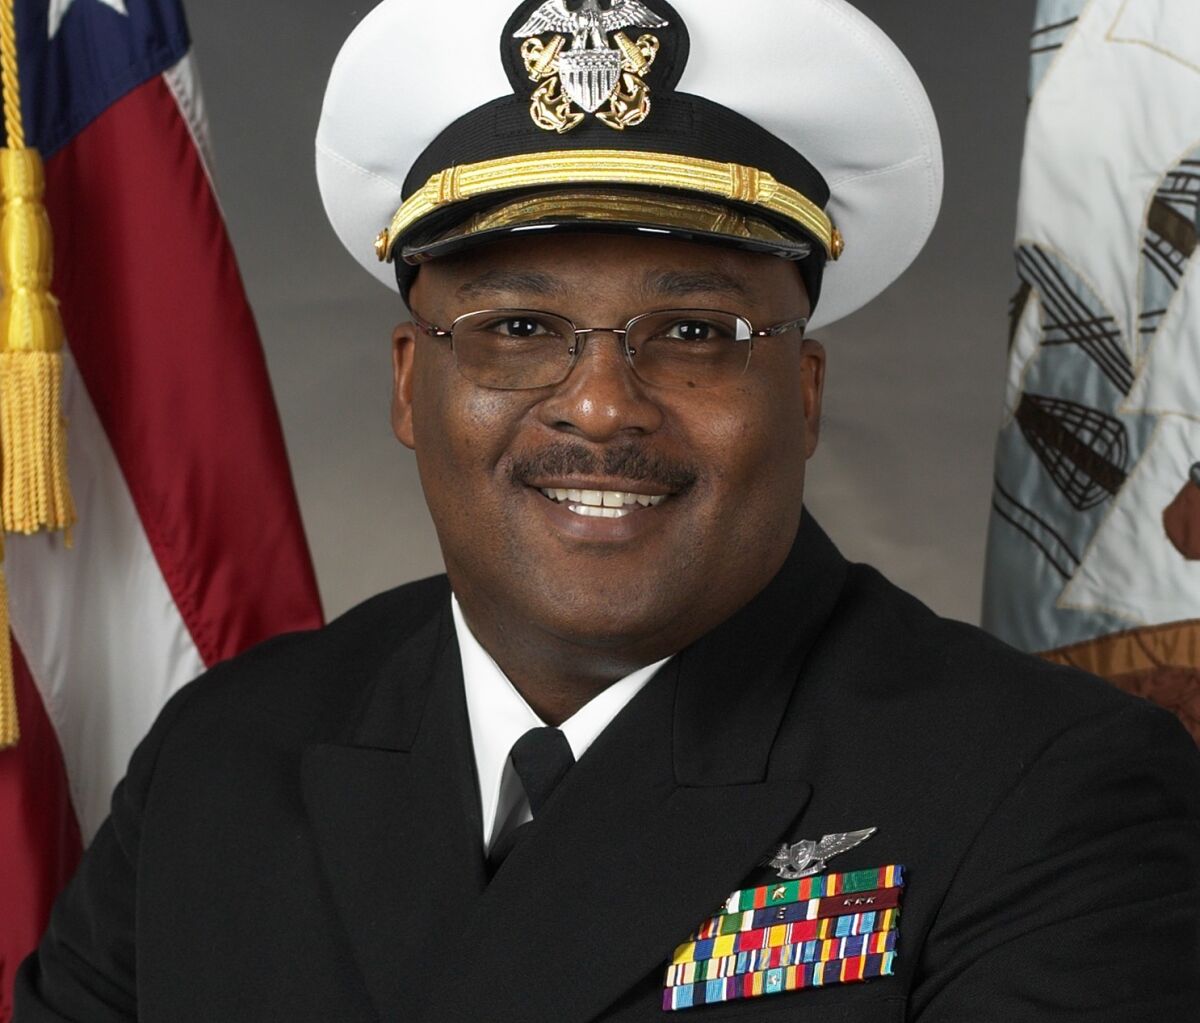 Dennis Eley is shown wearing his Navy uniform.